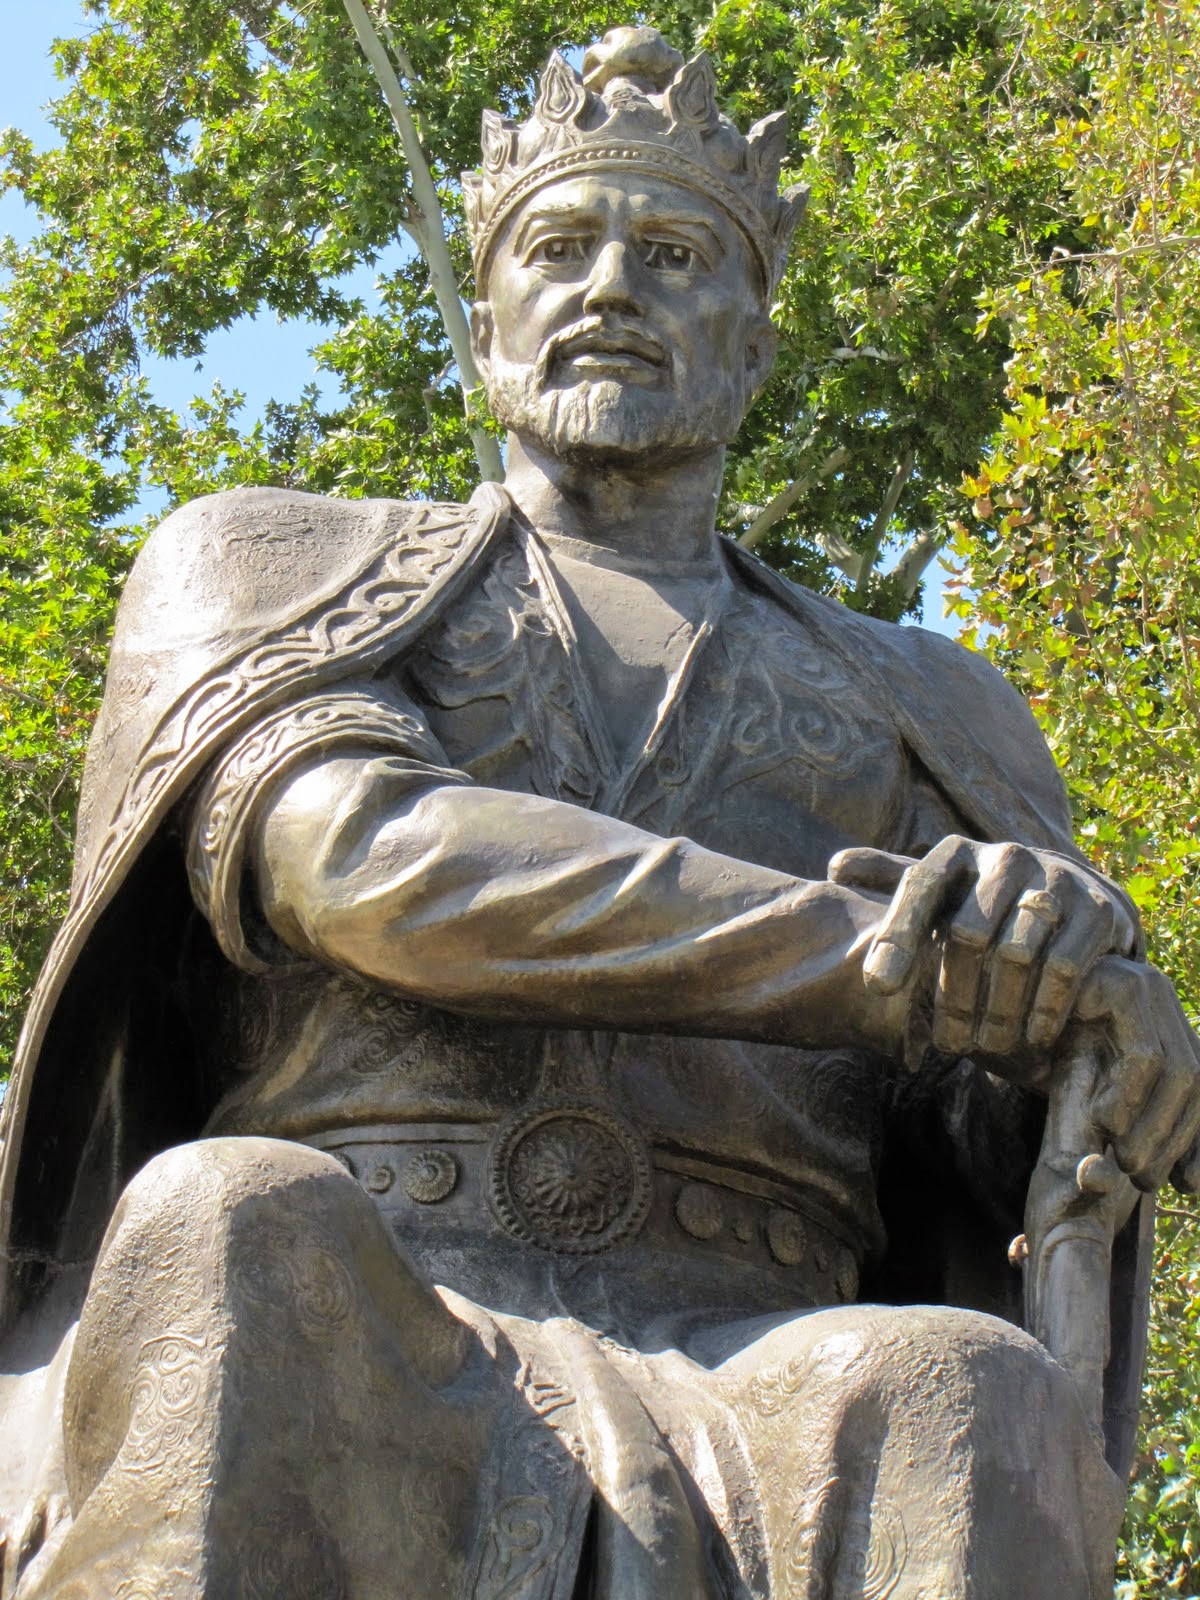 Amir Temur - Амир Темур (1336-1405)